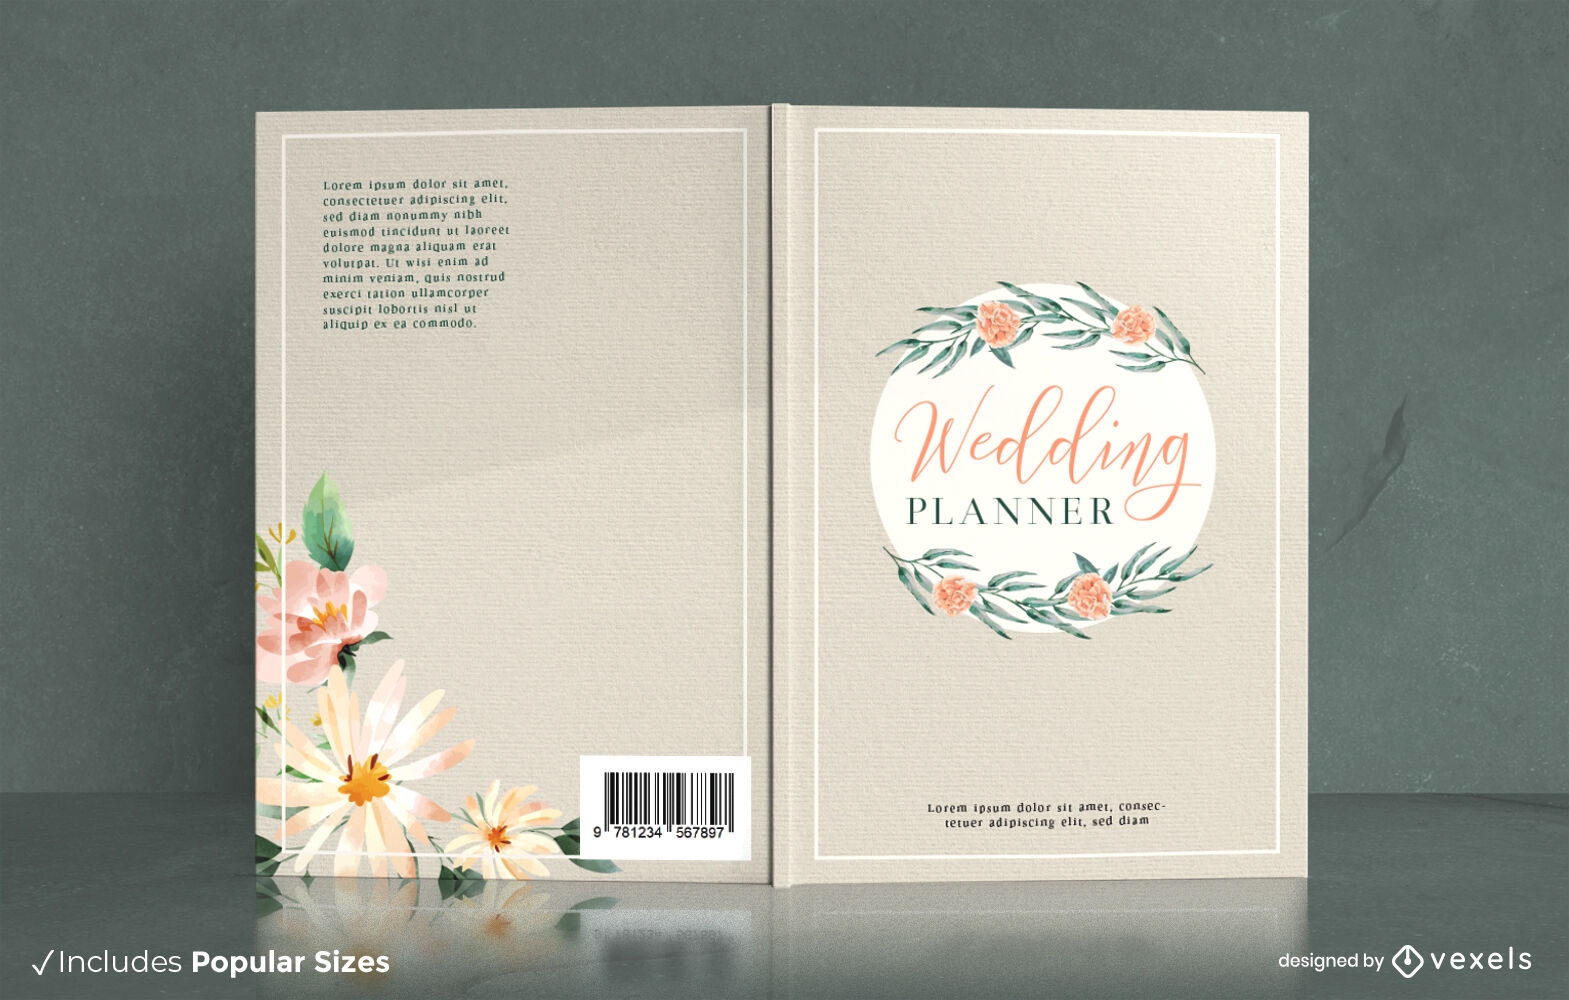 Wedding planner book cover design